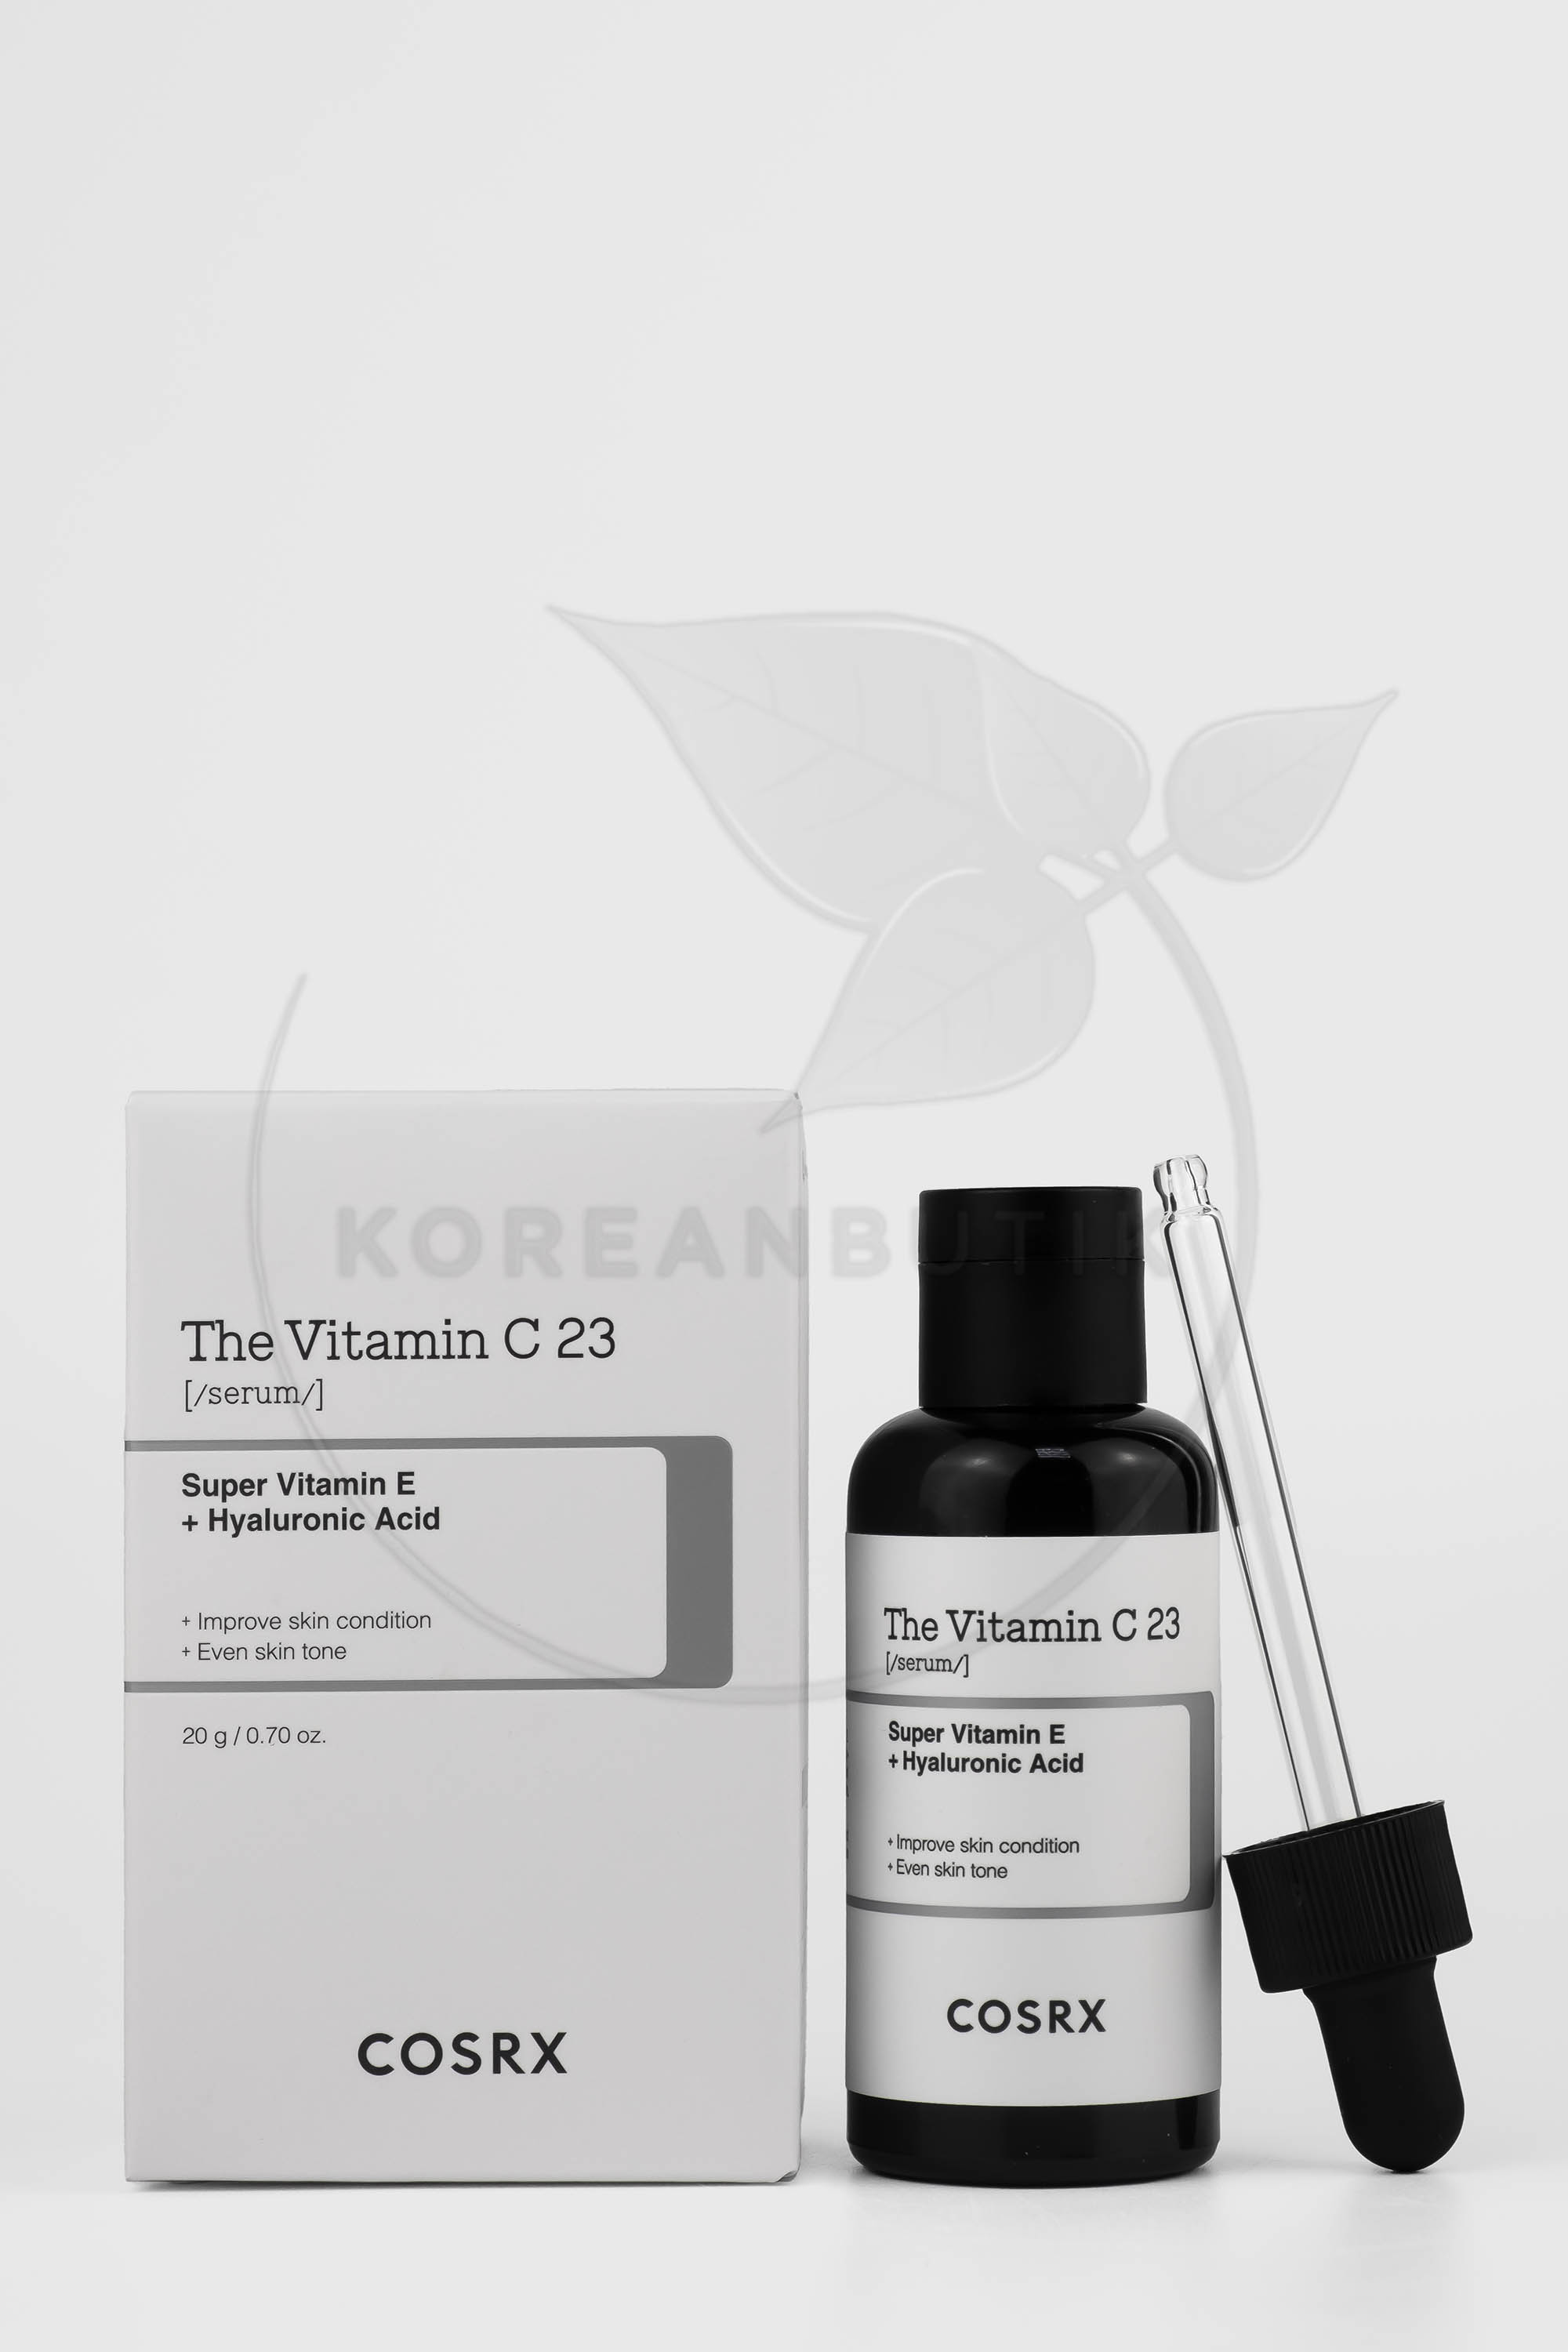  Cosrx The Vitamin C 23 serum 20g..